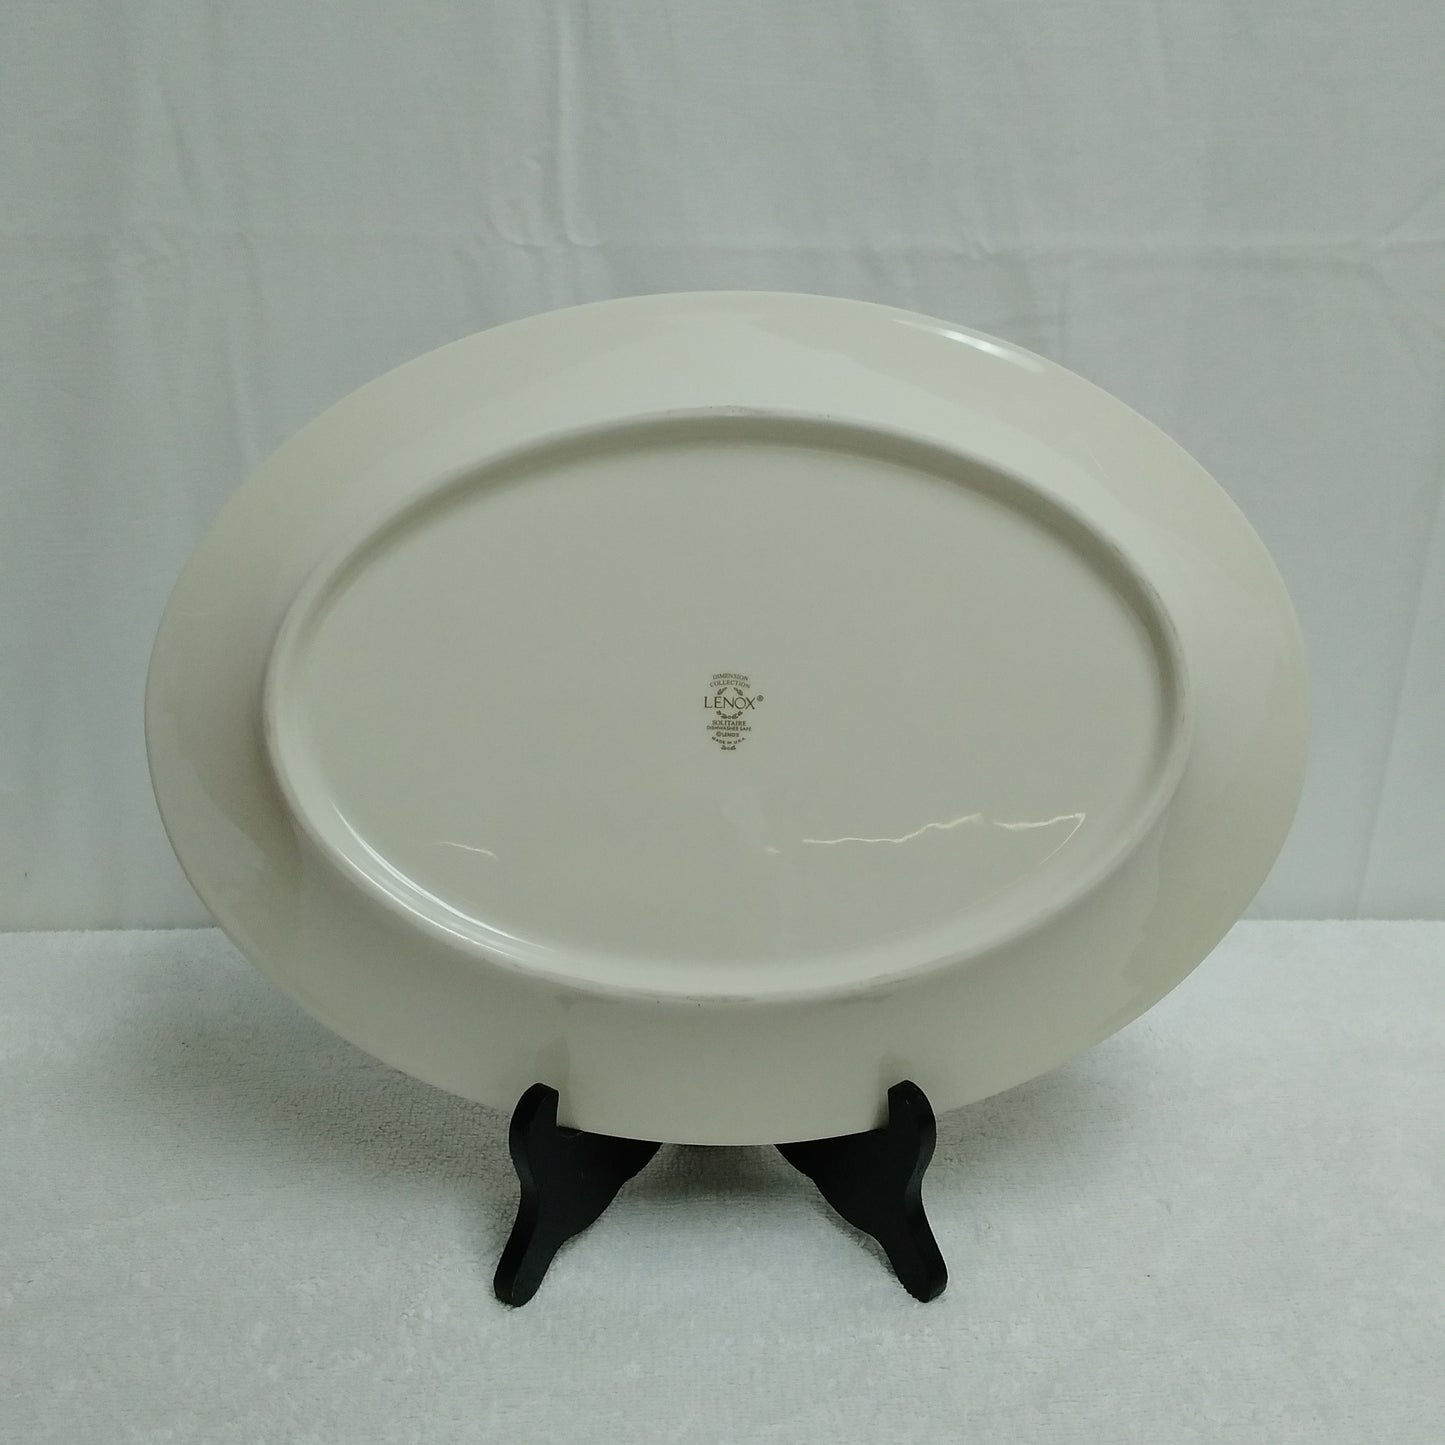 Lenox 13" Dimension Collection Solitaire Oval Serving Platter with Platinum Trim